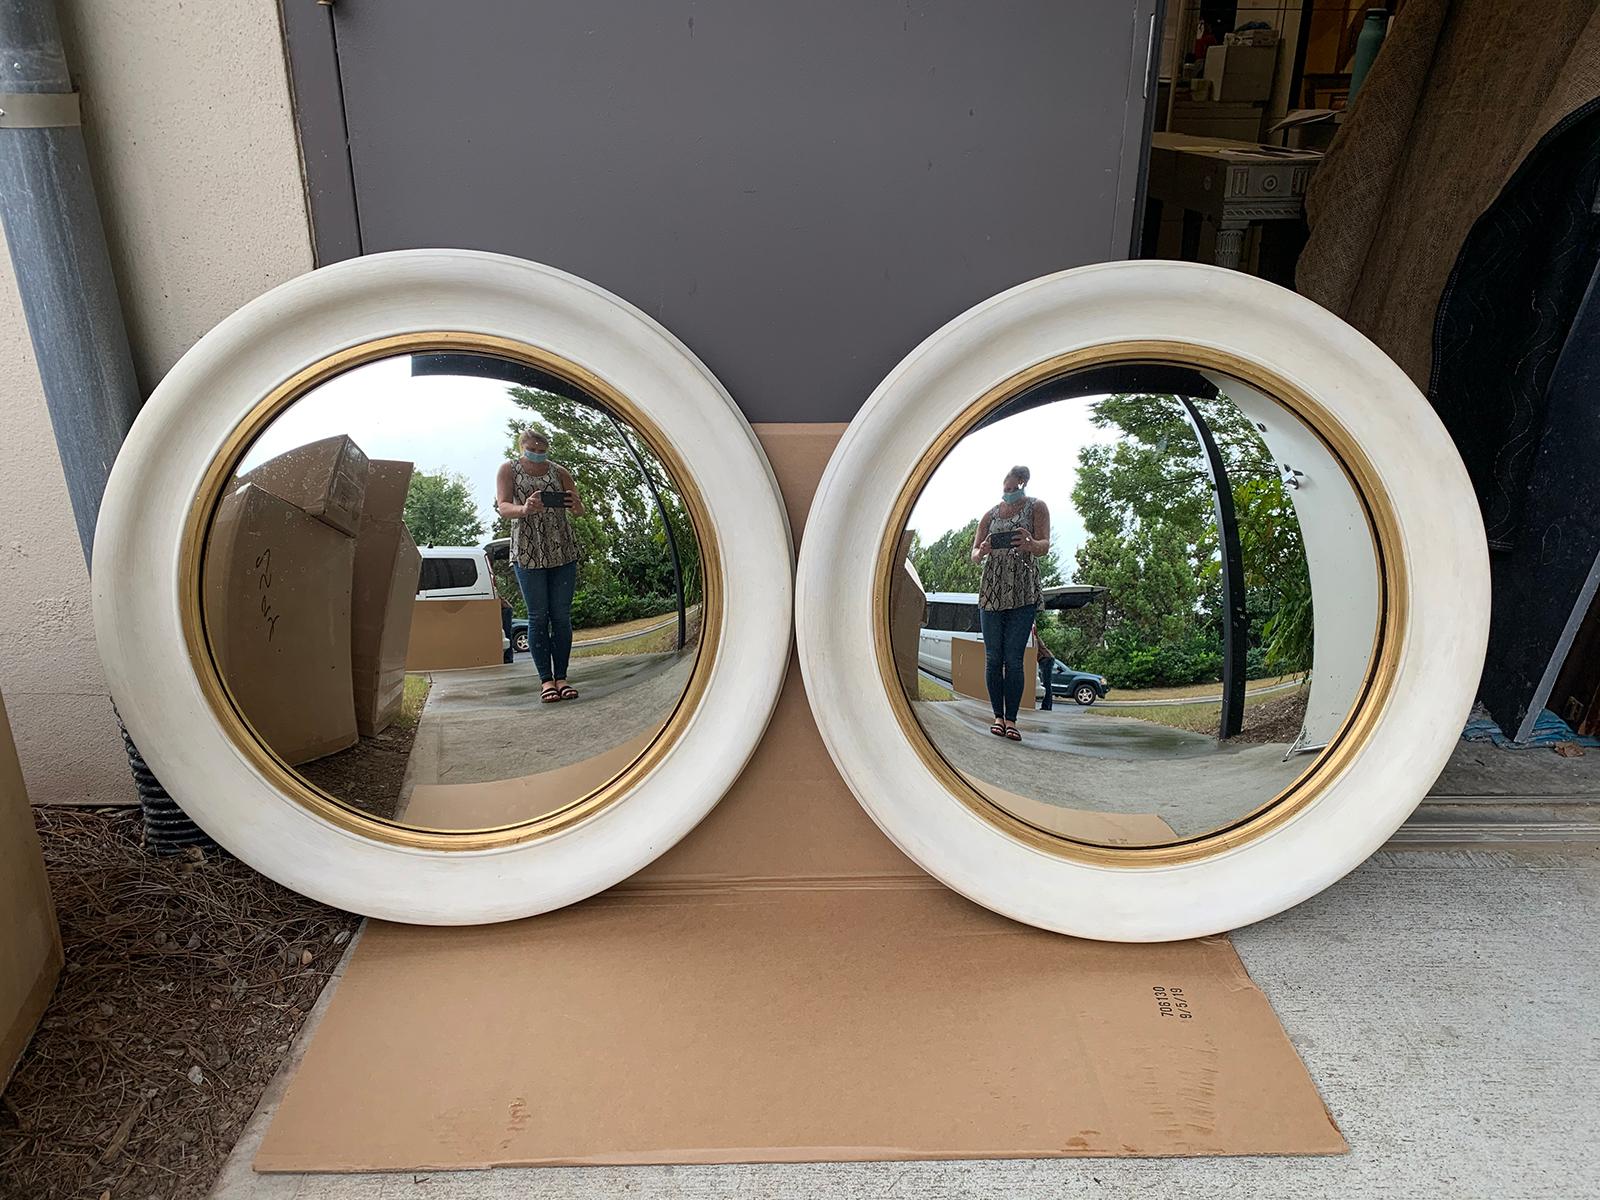 Pair of 20th century round convex mirrors with custom hand painted finish.